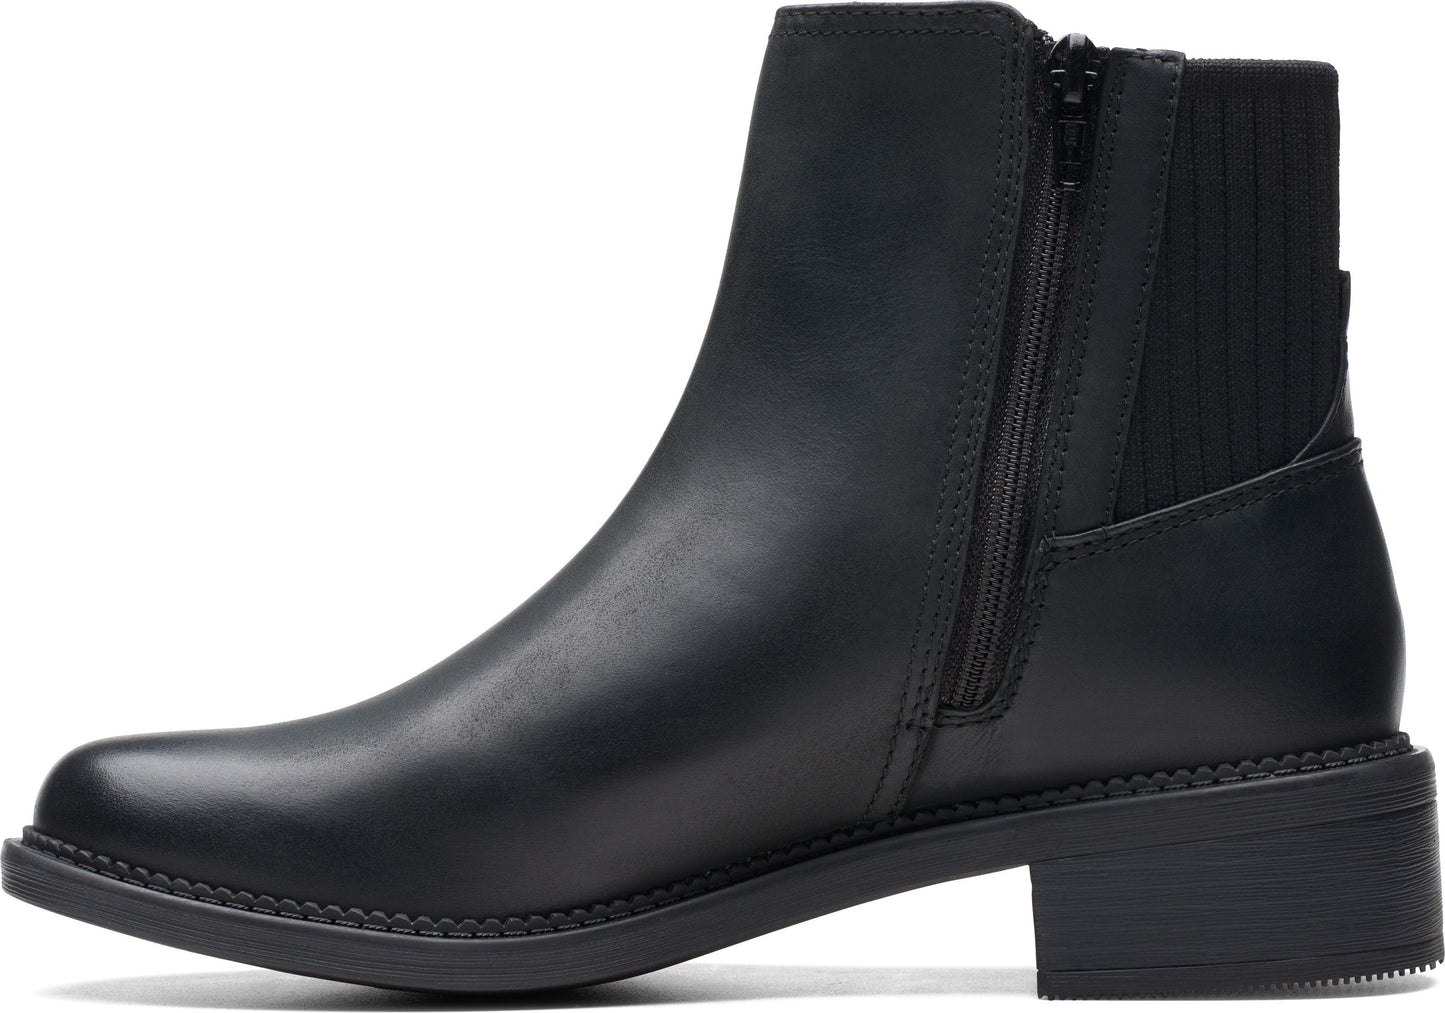 Clarks Boots Maye Palm Black Leather